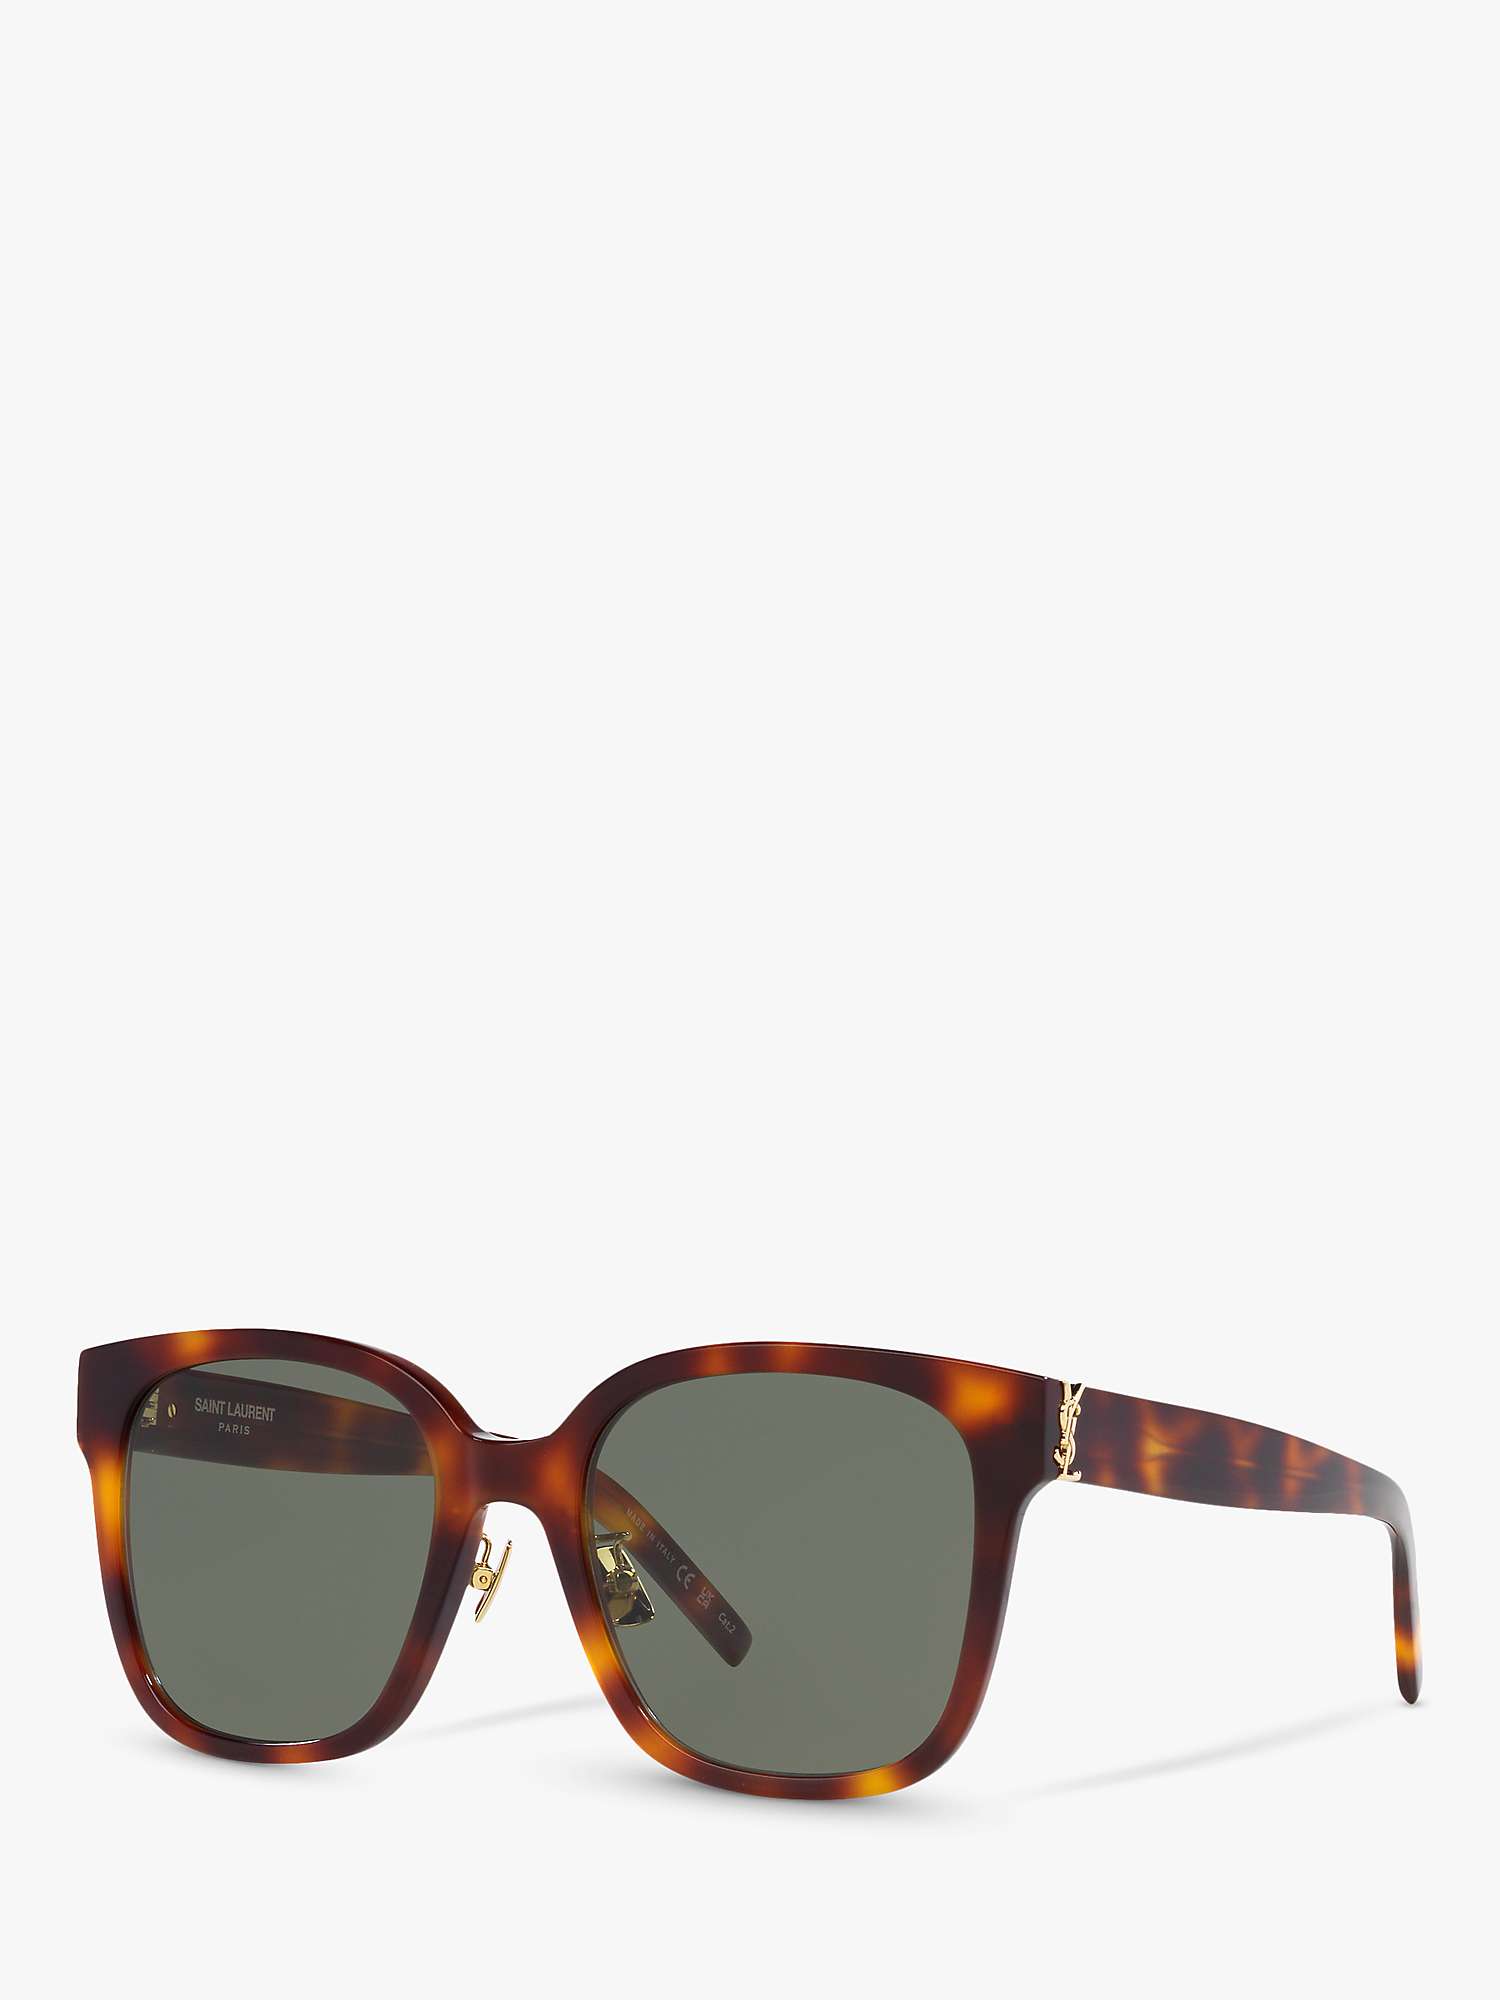 Buy Yves Saint Laurent SL M105 Women's Square Sunglasses, Tortoise/Grey Online at johnlewis.com